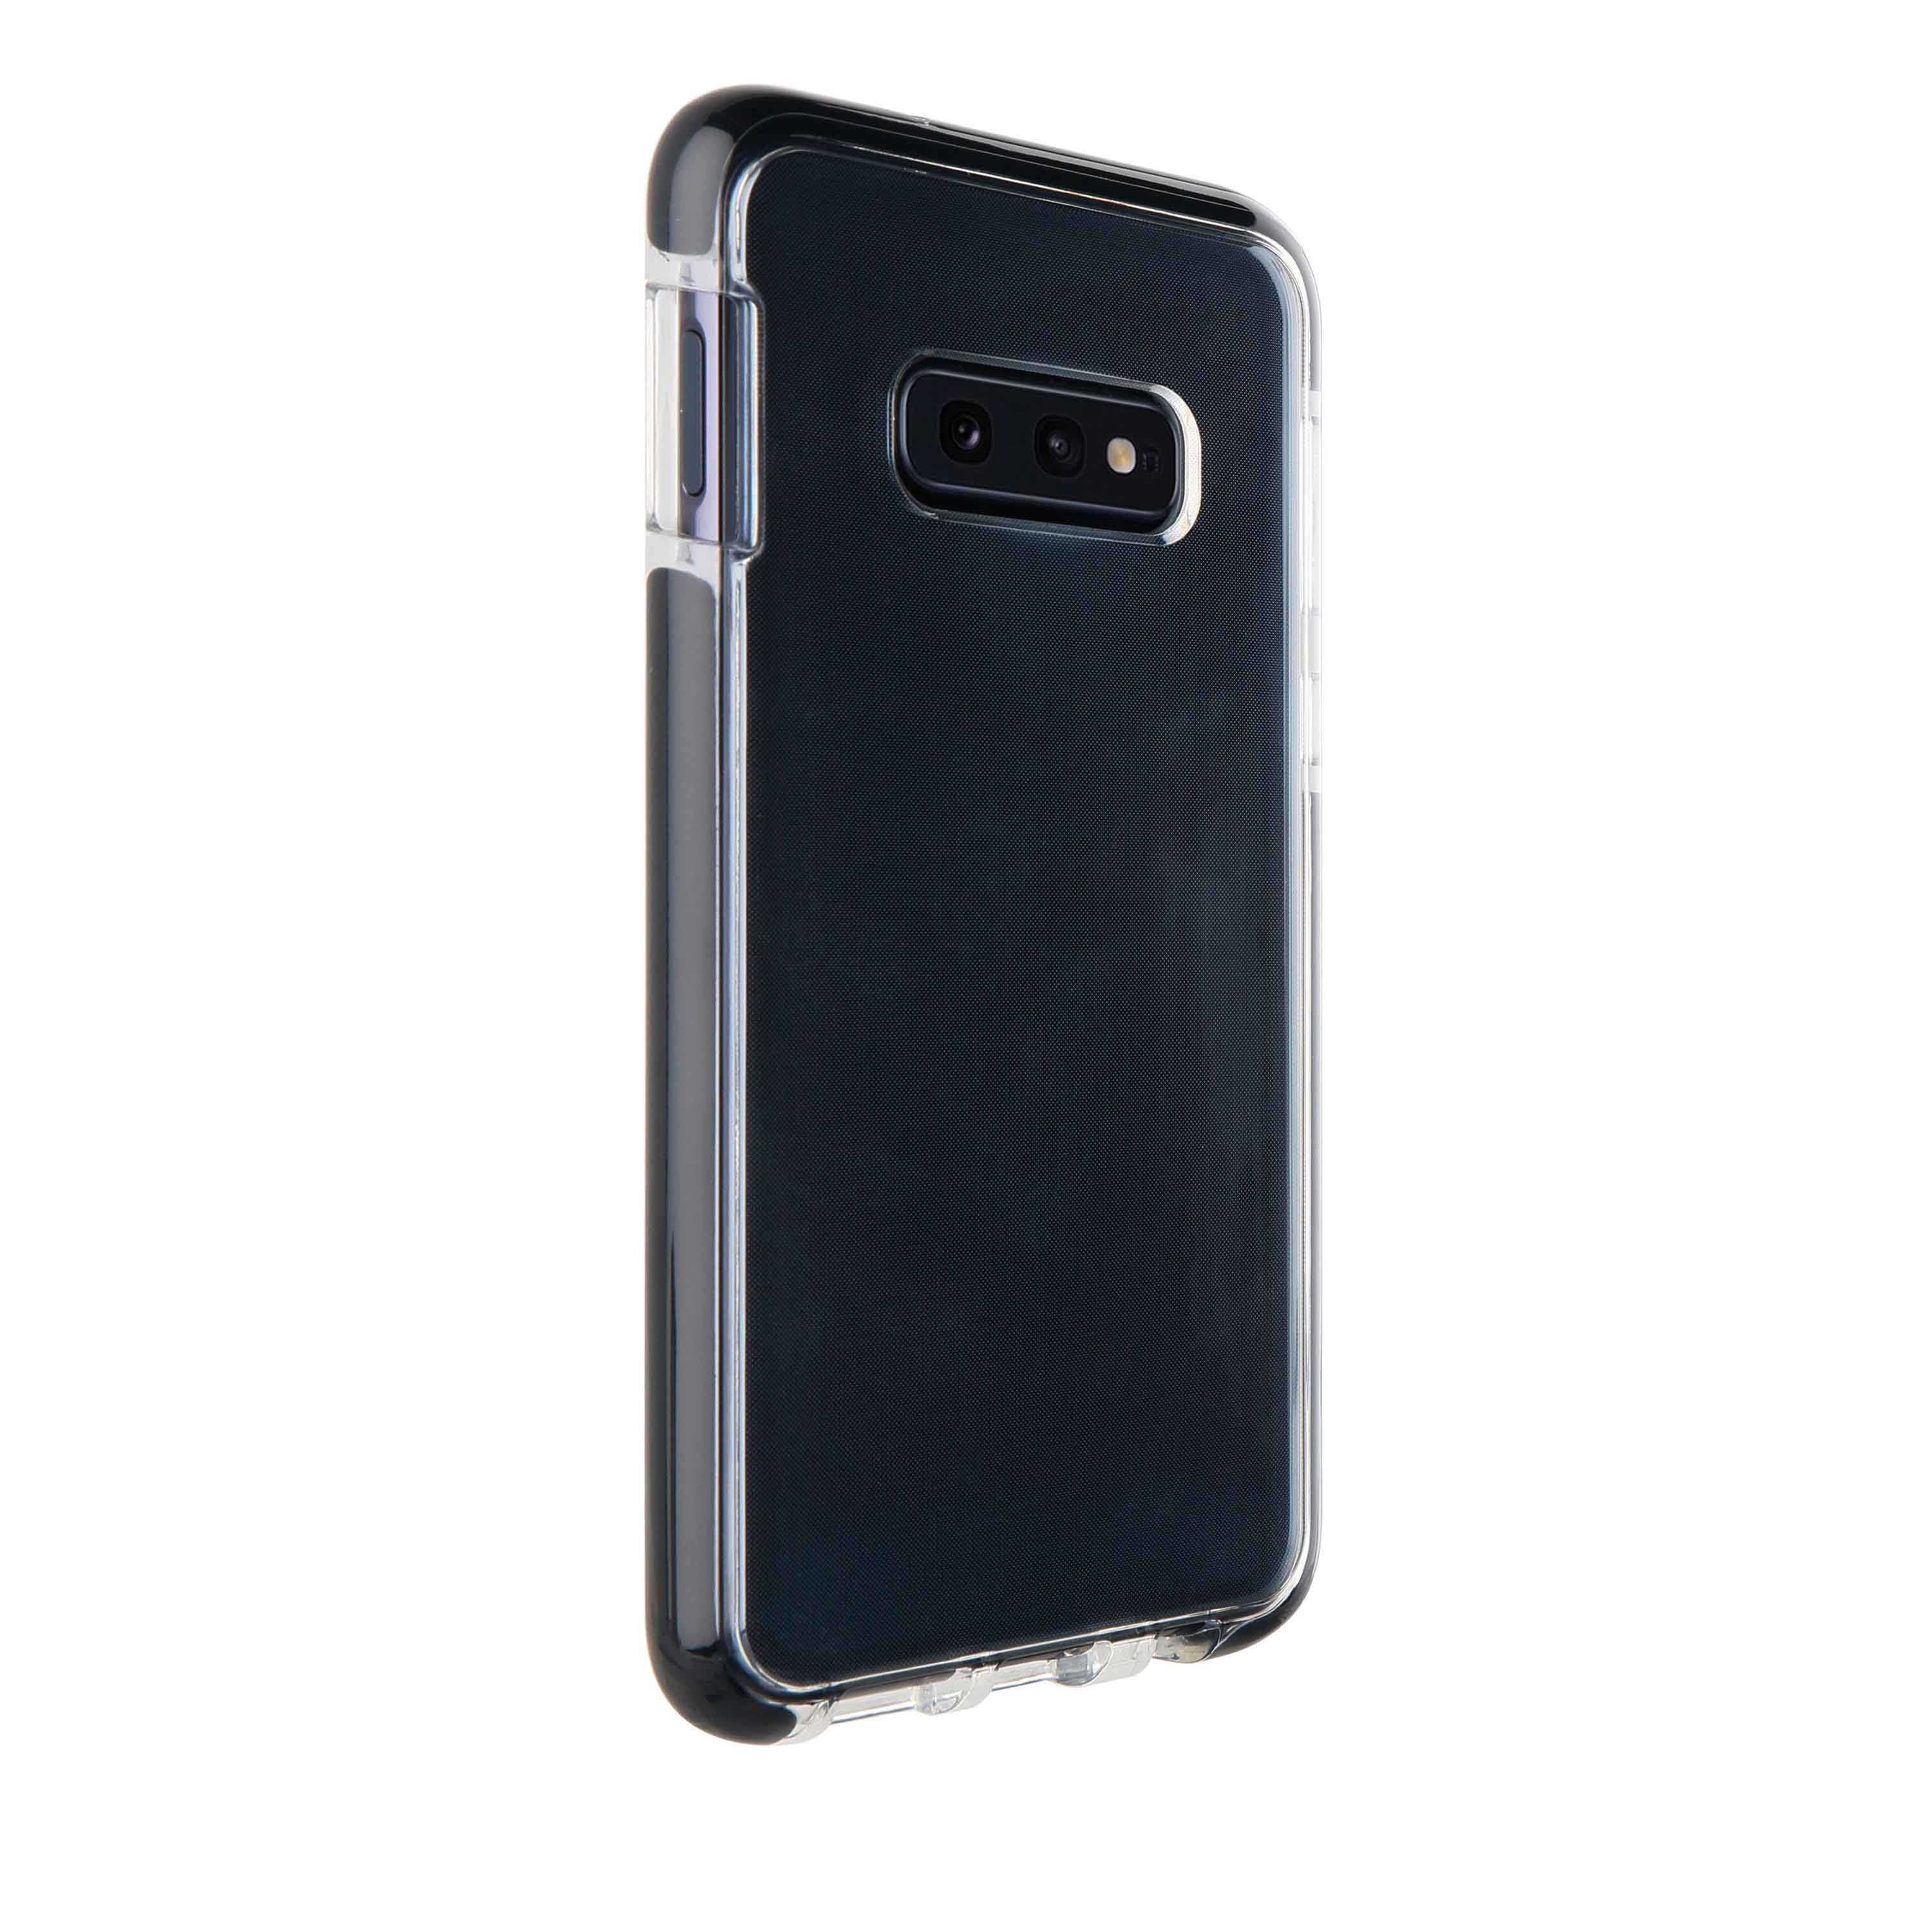 VIVANCO 61269 Rock Solid, Transparent/Schwarz S10e, Galaxy Samsung, Backcover